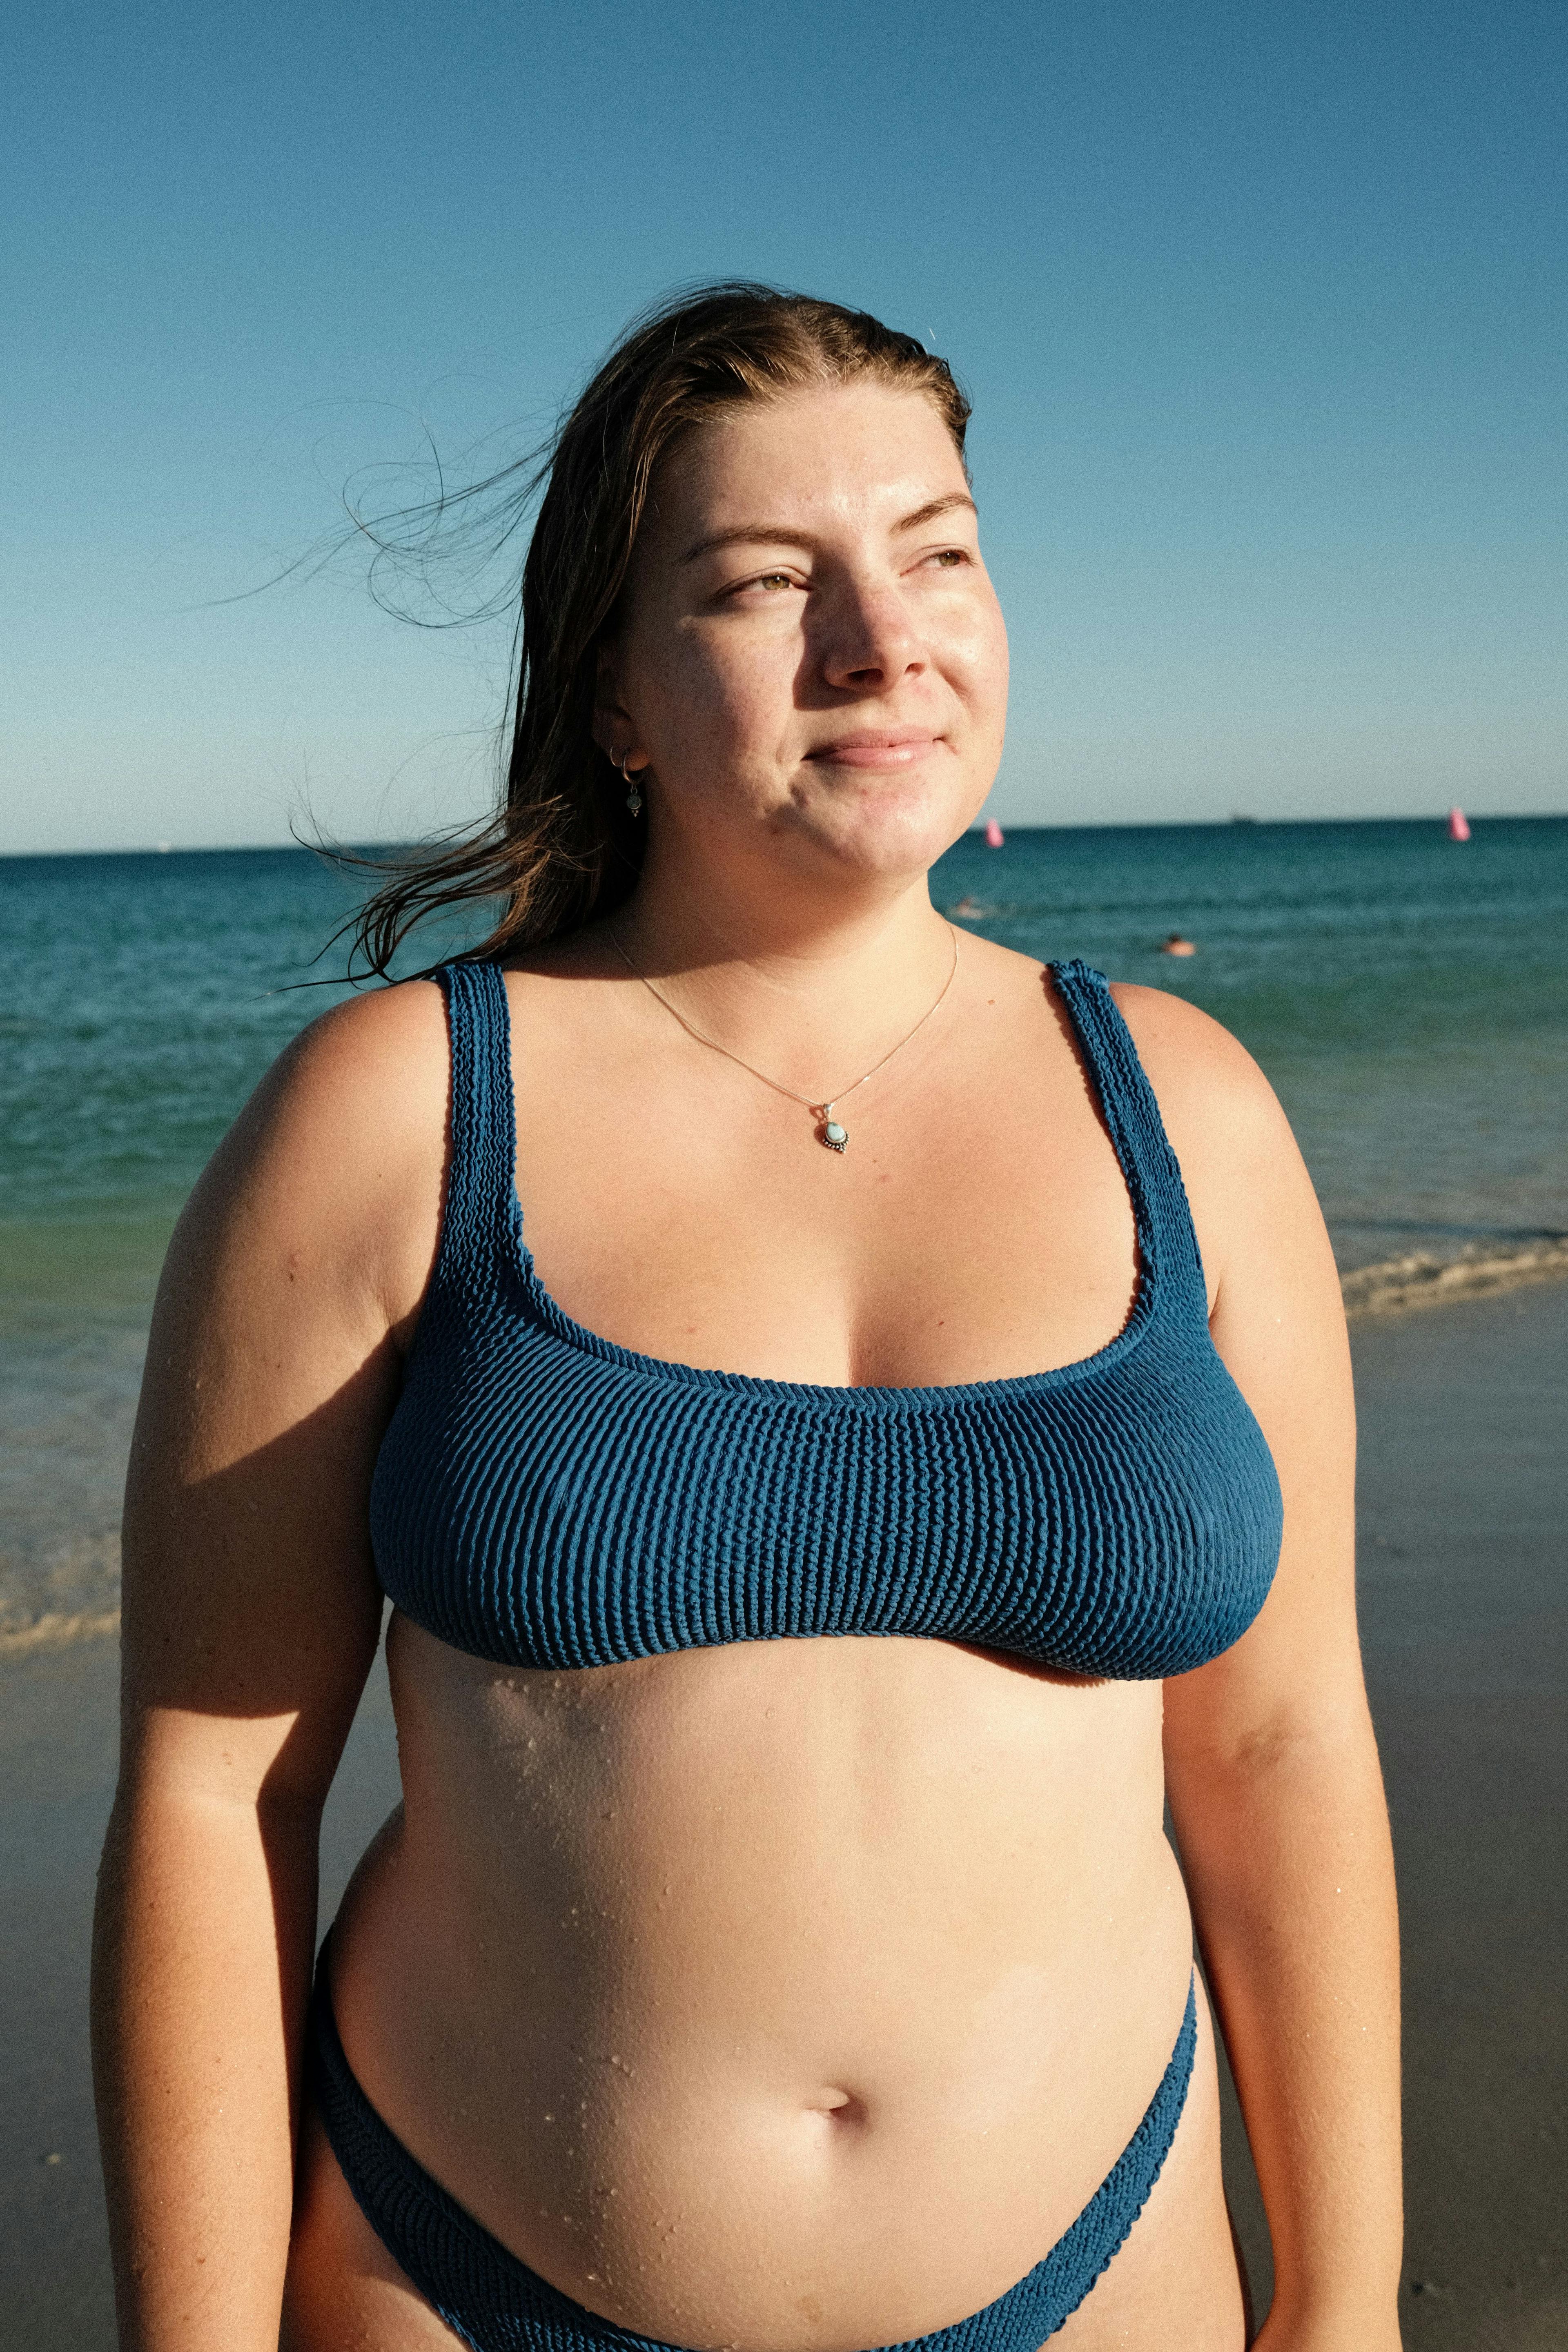 Tara wearing blue bikini by the ocean